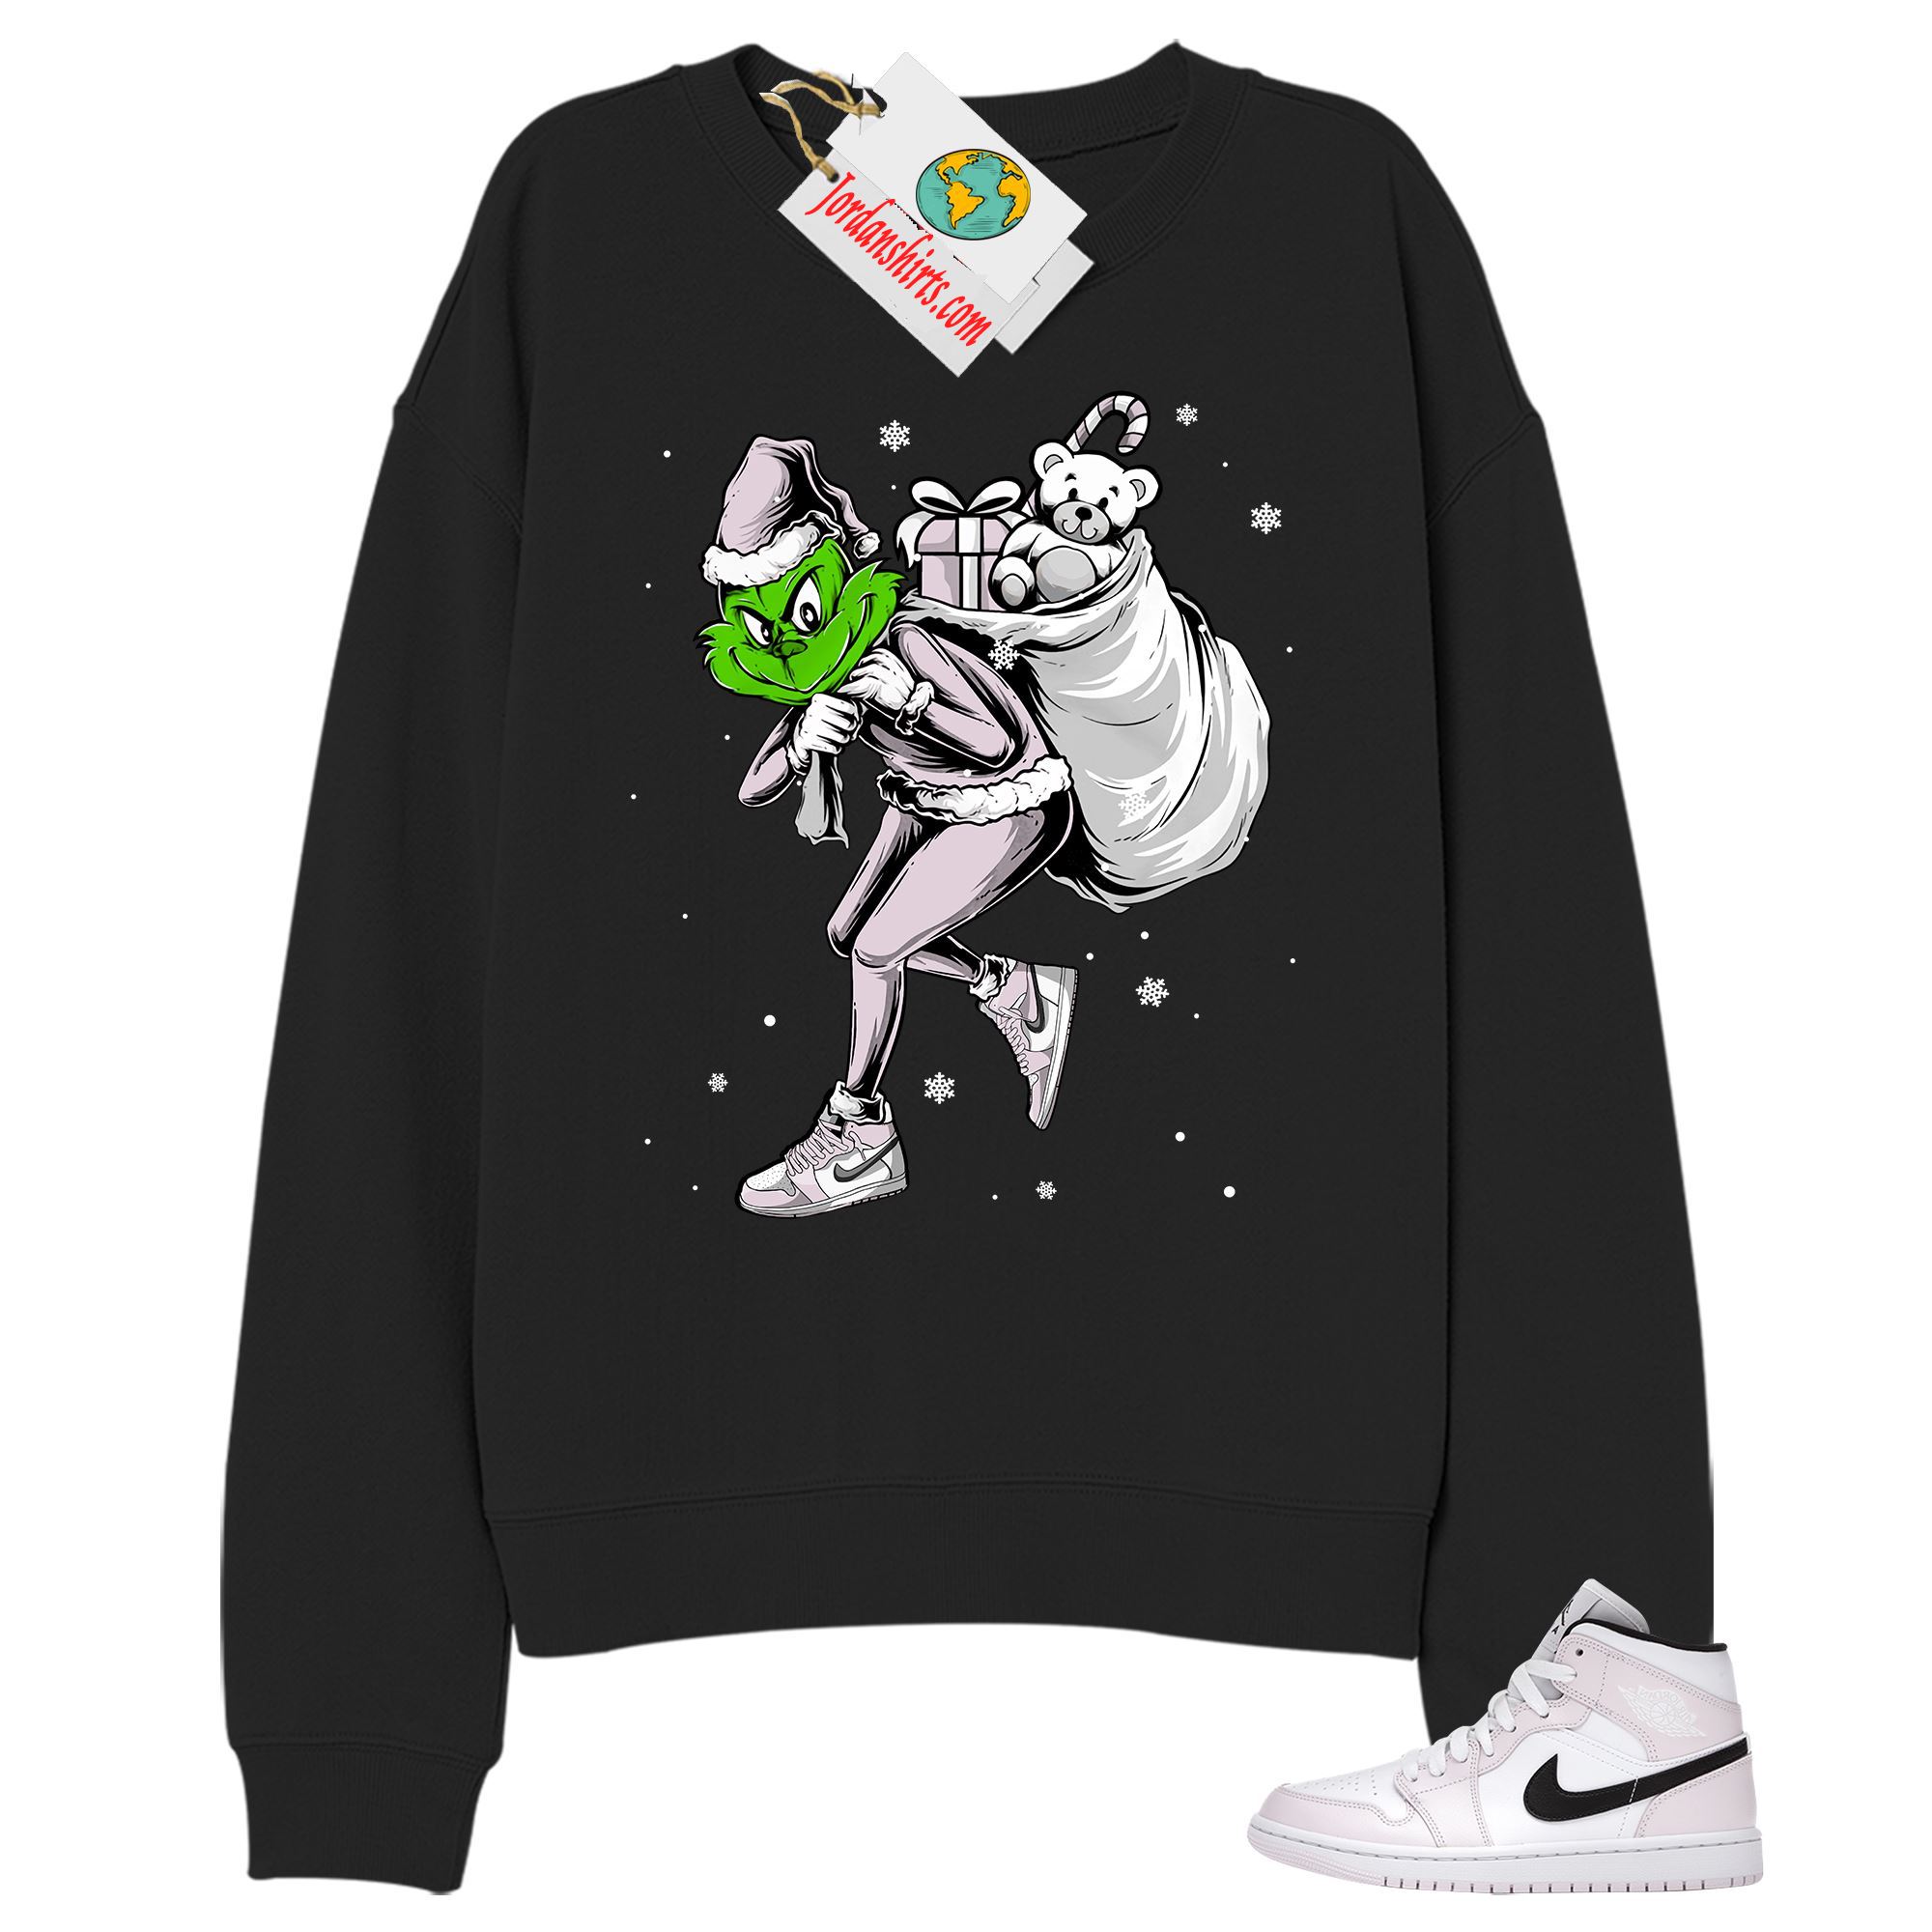 Jordan 1 Sweatshirt, Grinch Stolen Christmas Black Sweatshirt Air Jordan 1 Barely Rose 1s Full Size Up To 5xl